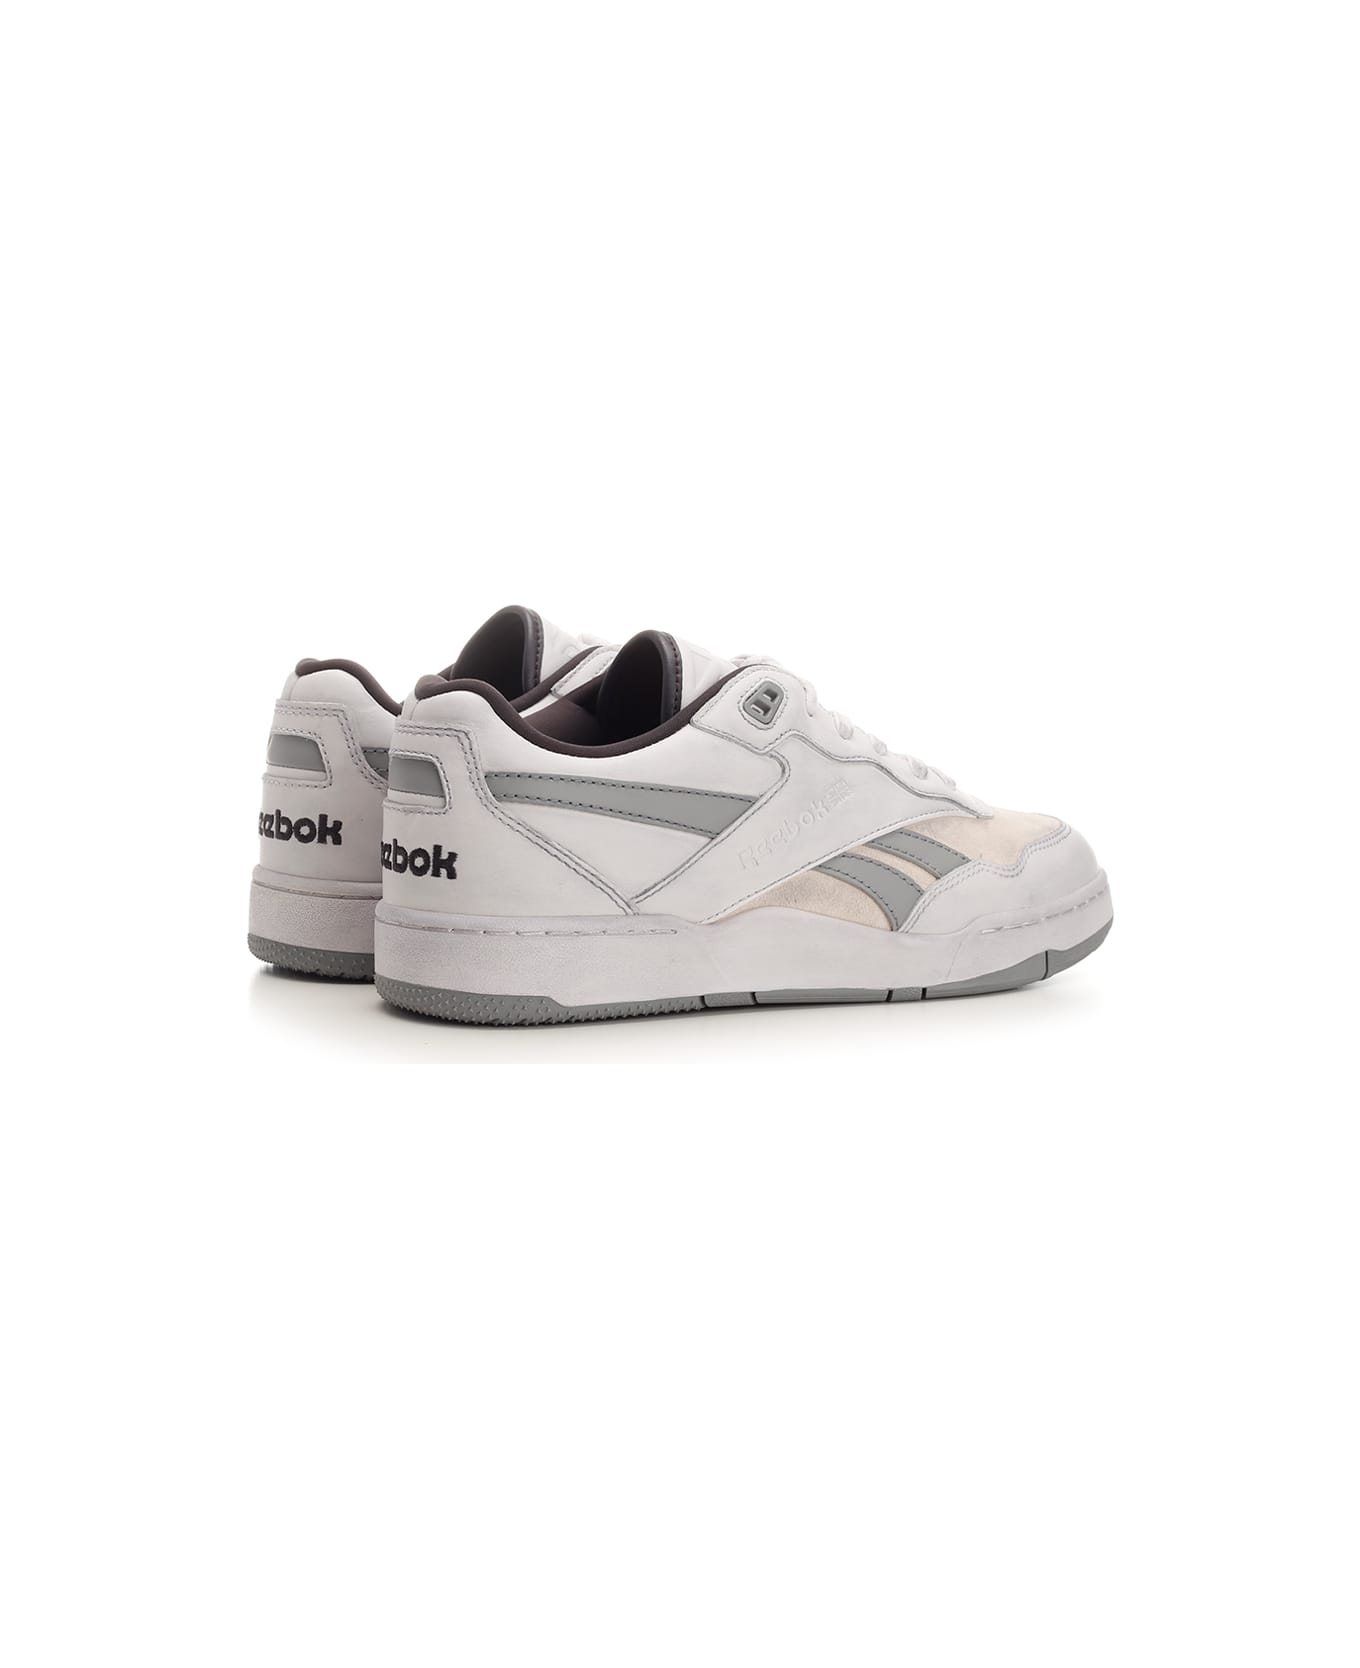 Reebok 'bb4000' Sneakers - Grey